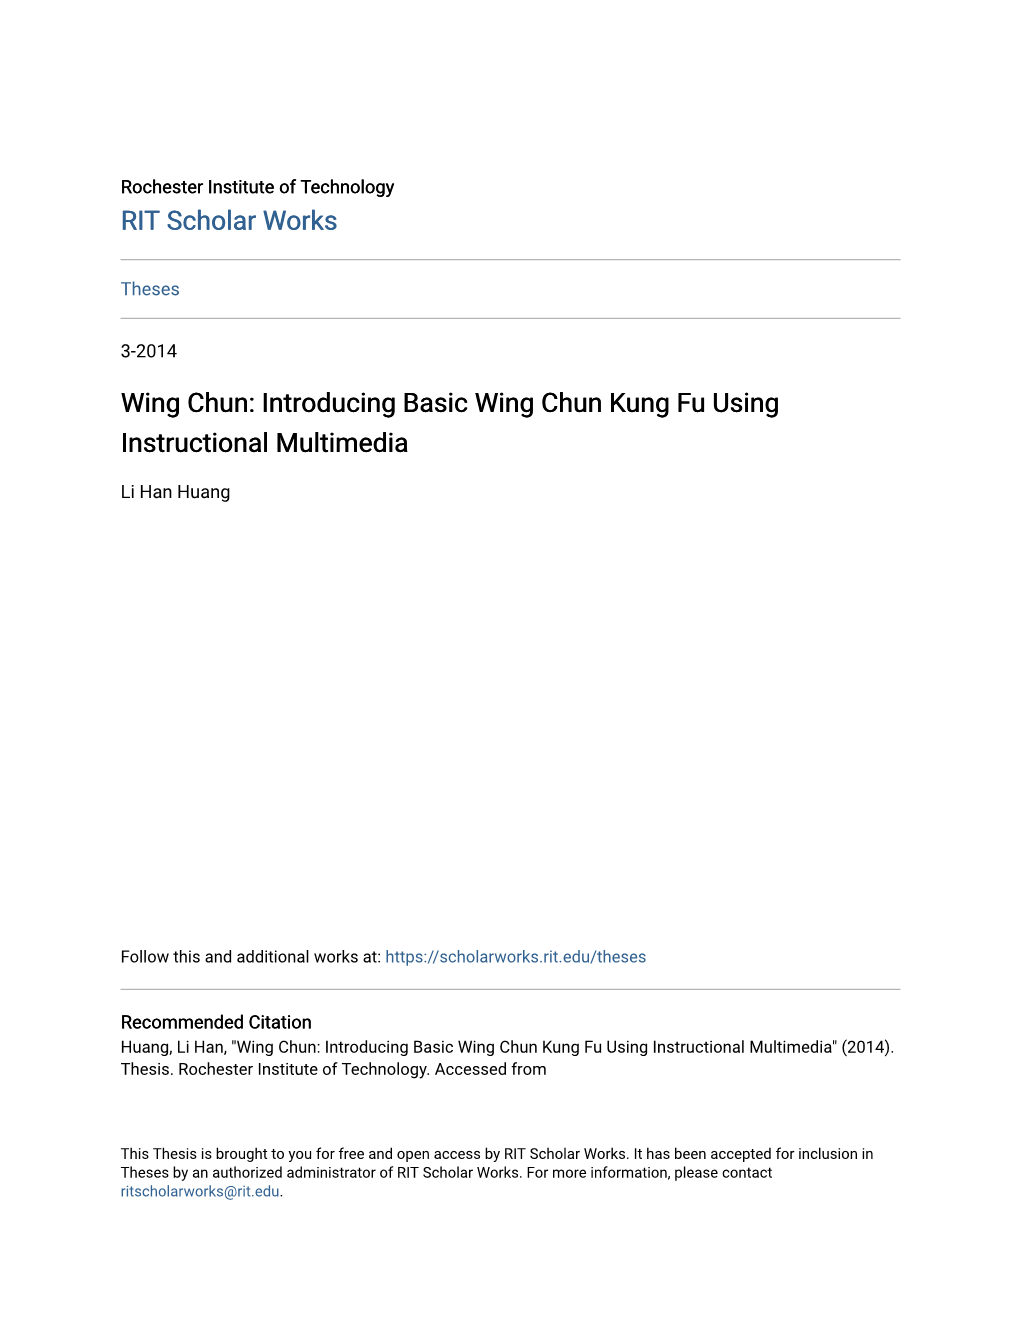 Introducing Basic Wing Chun Kung Fu Using Instructional Multimedia